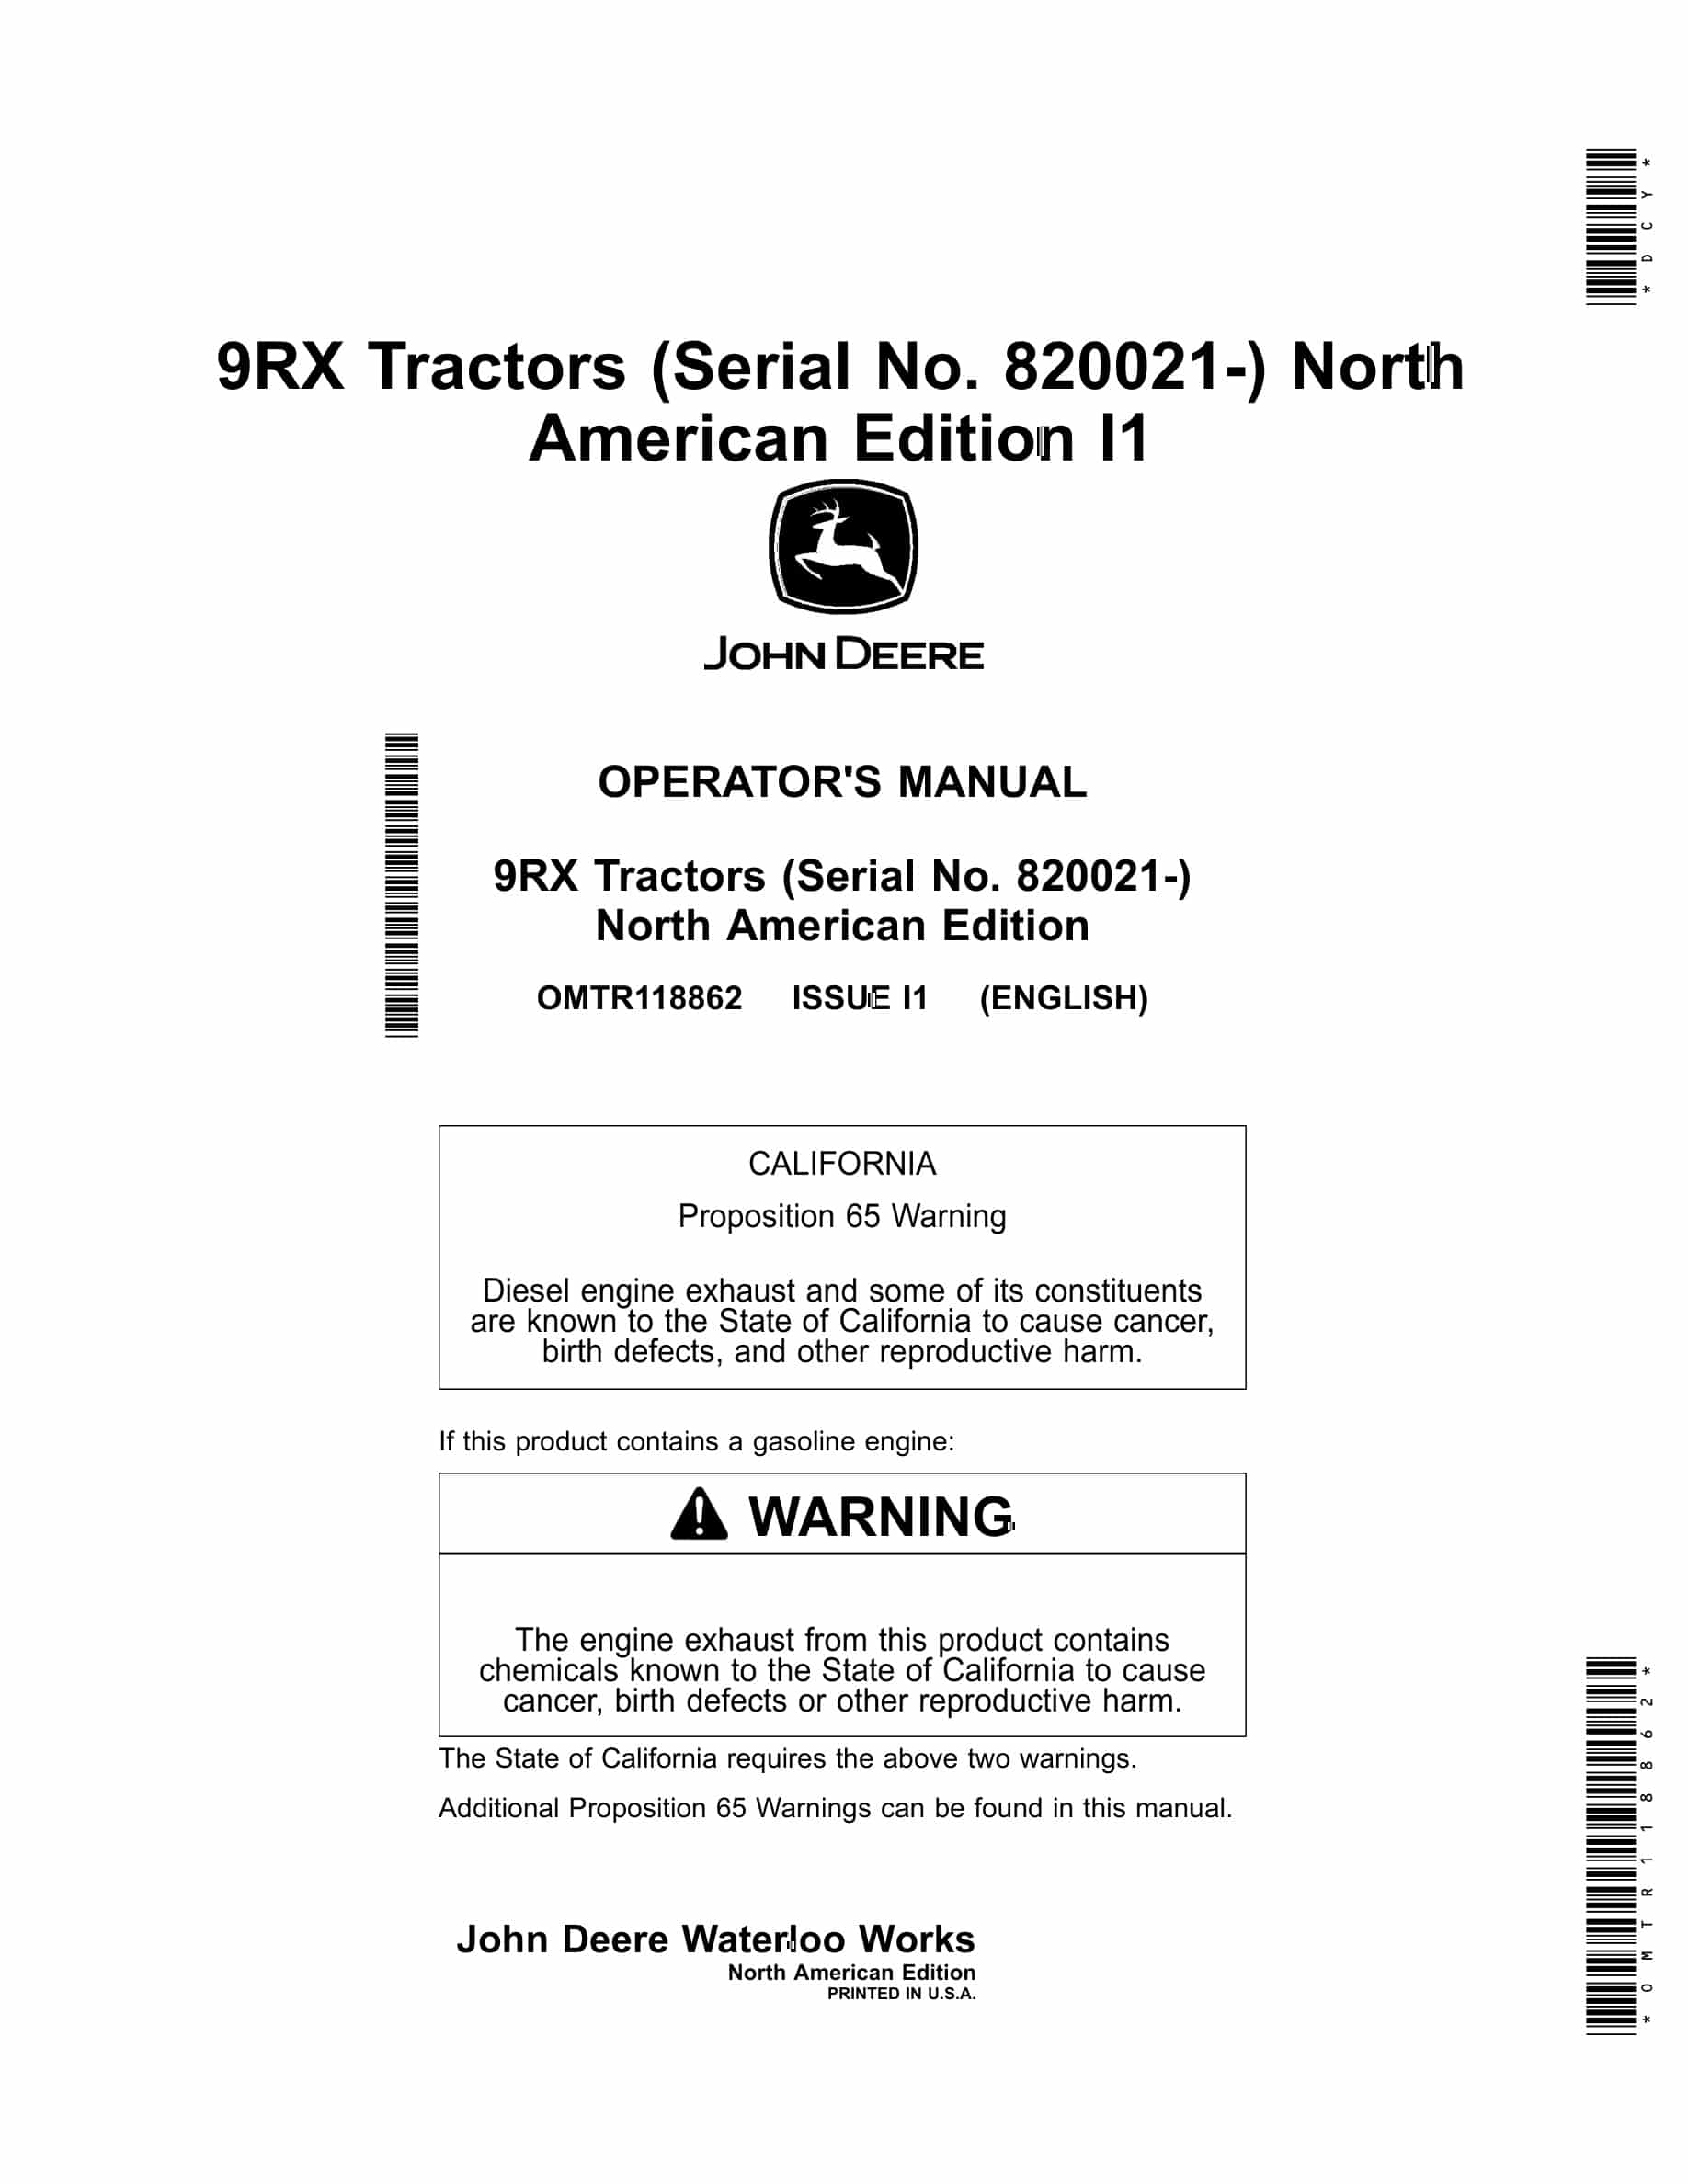 John Deere 9RX Tractor Operator Manual OMTR118862-1